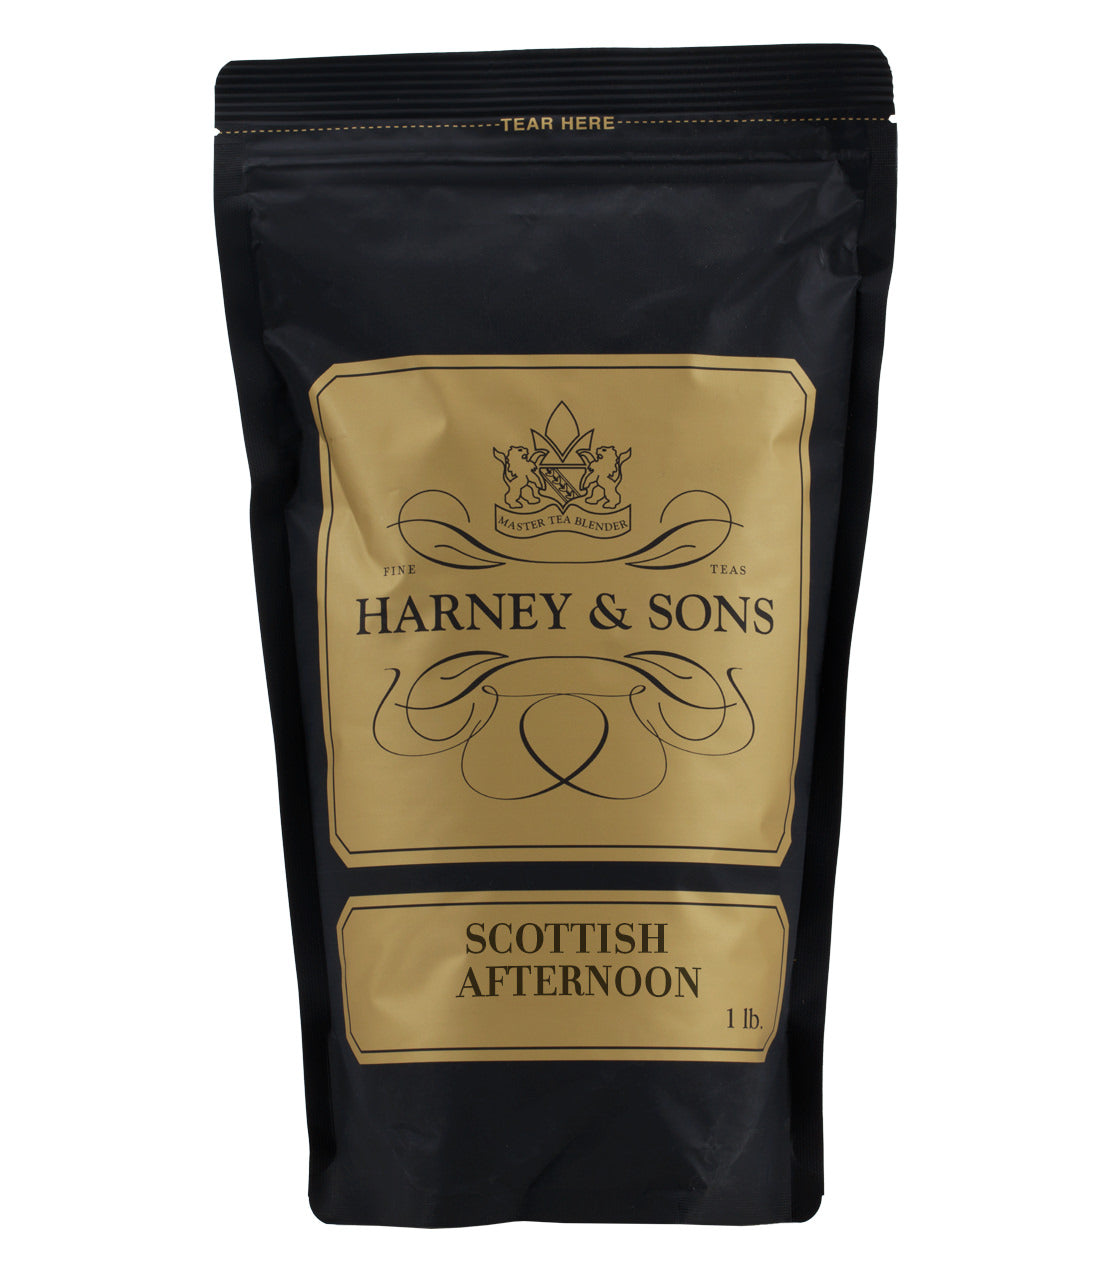 Scottish Afternoon - Loose 1 lb. Bag - Harney & Sons Fine Teas